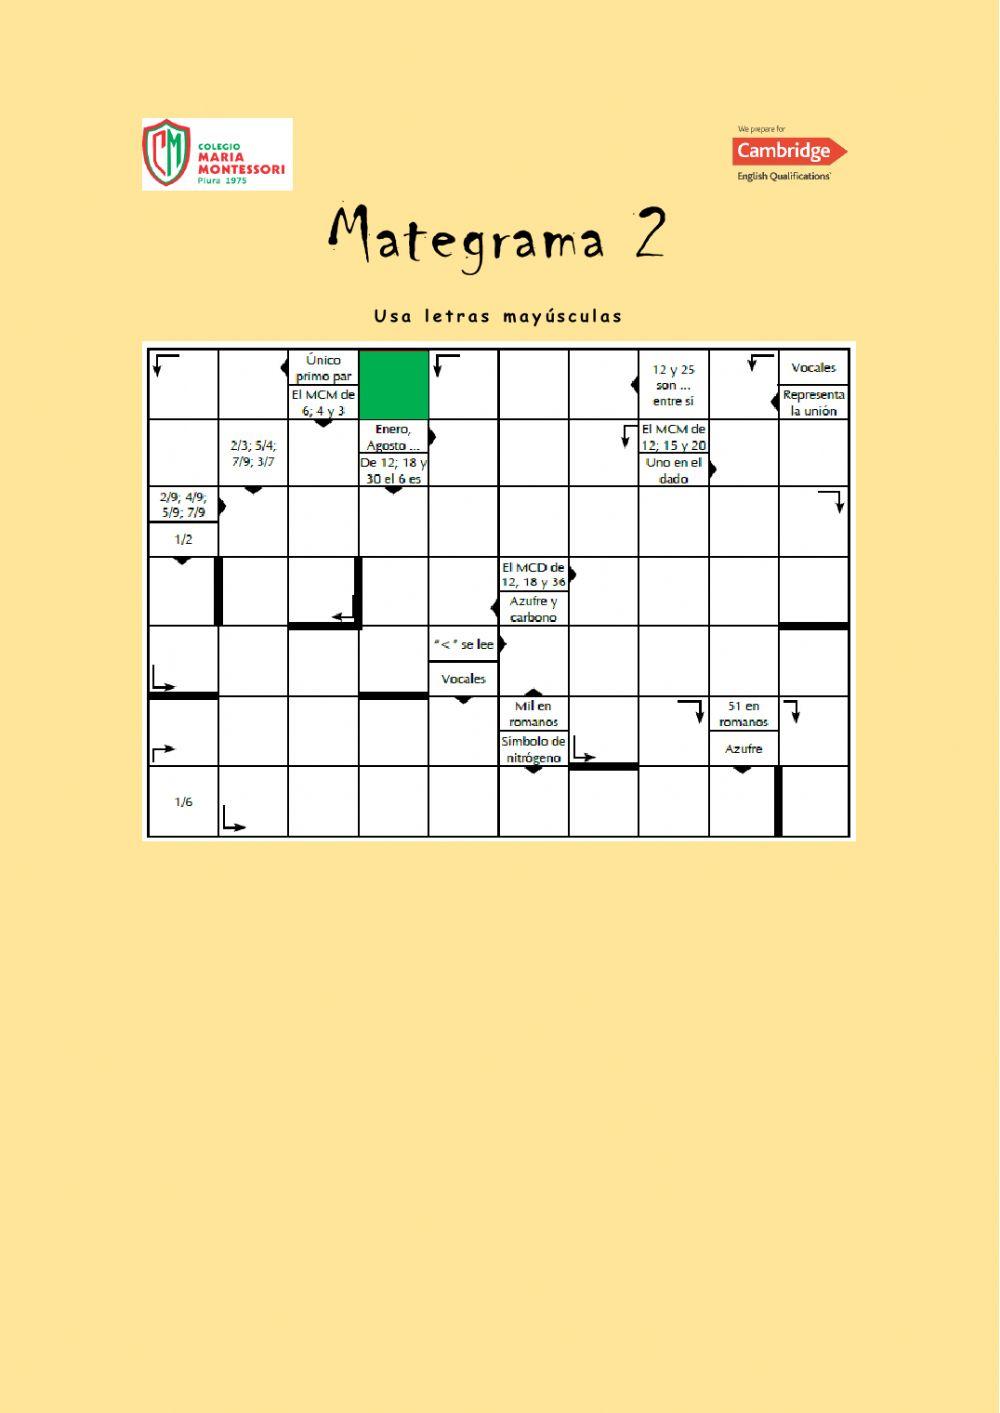 Mategrama 2